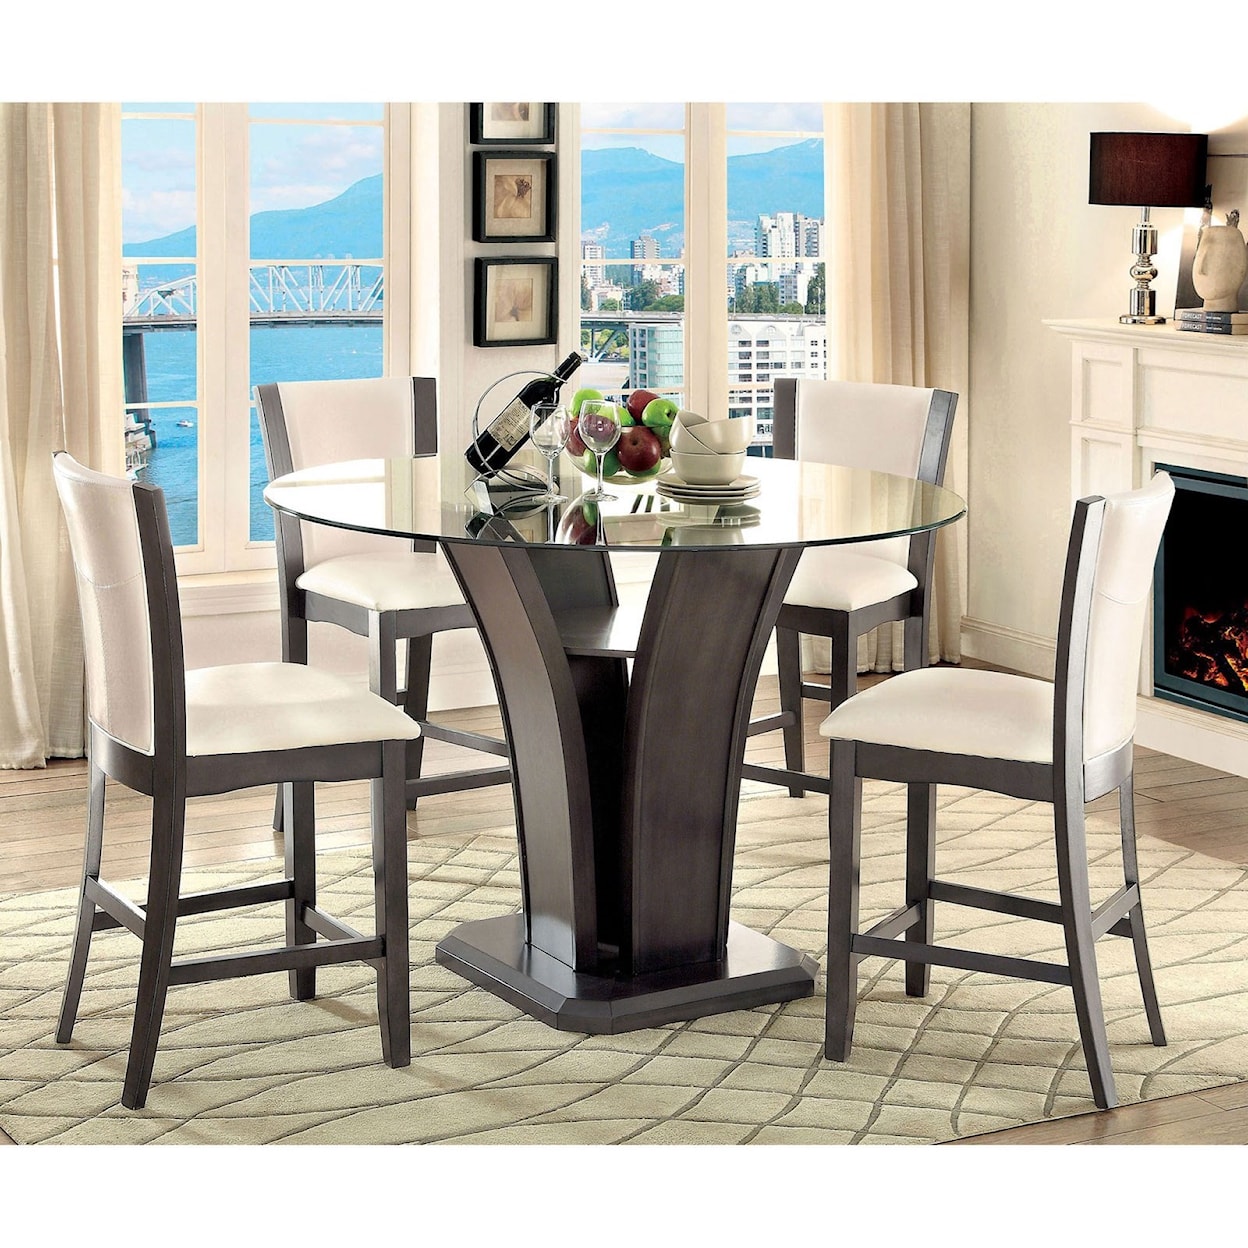 Furniture of America Manhattan III Set of 2 Counter Height Chairs